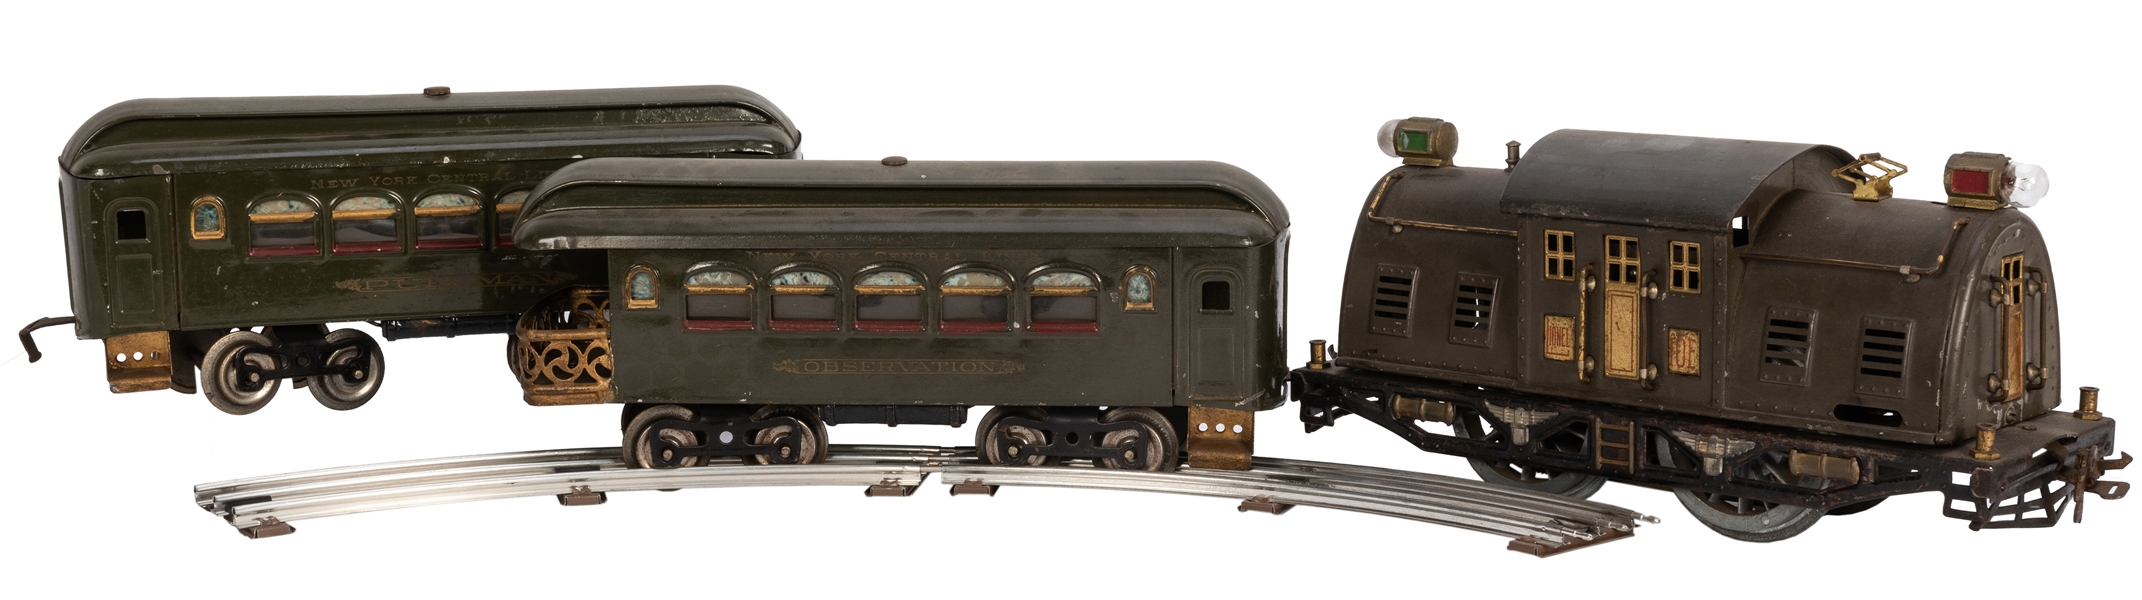 Lionel Prewar Standard Gauge Set 352 with 10E Locomotive.